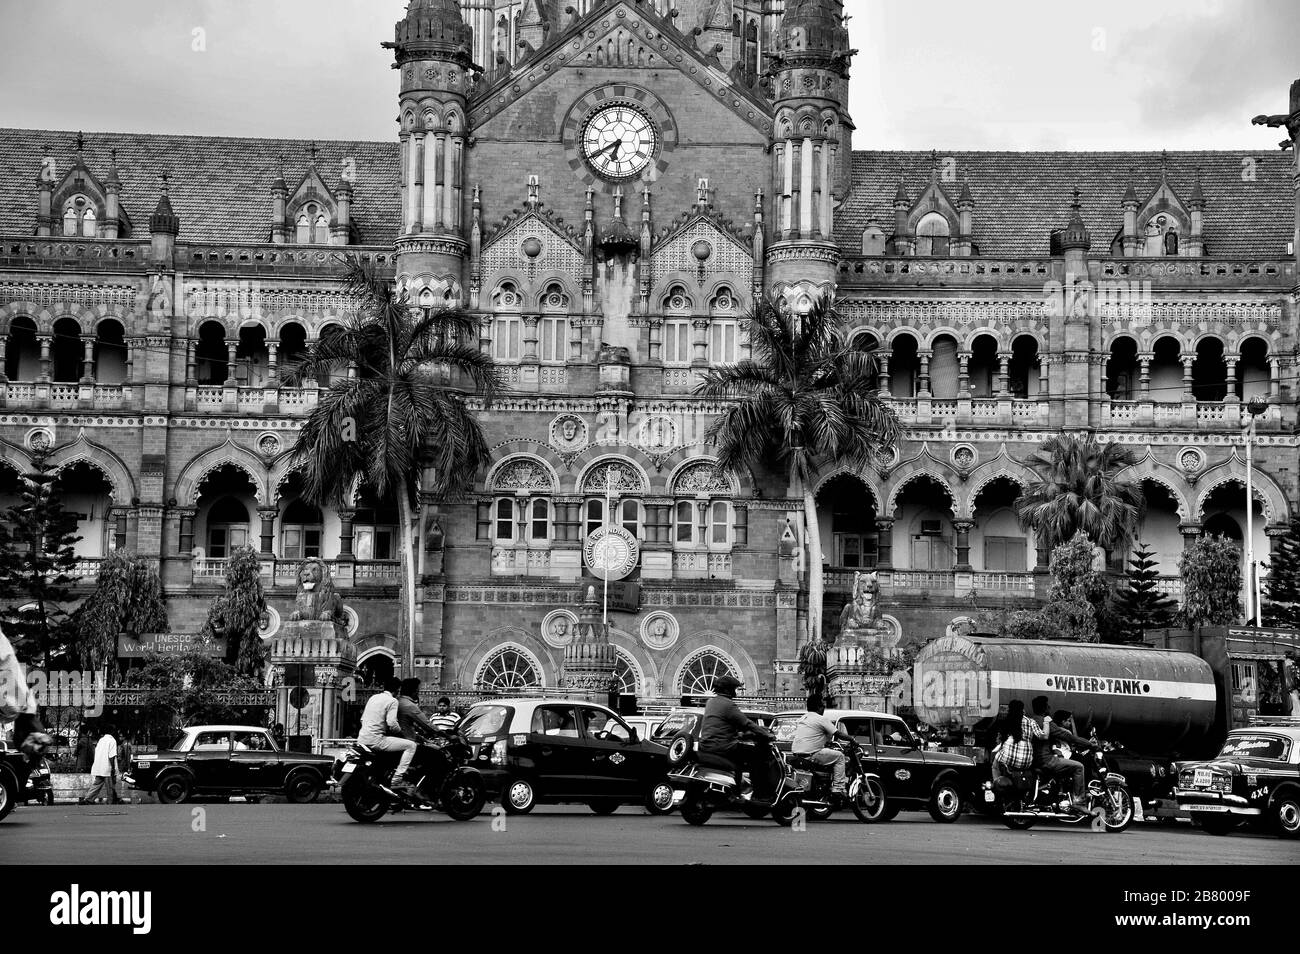 Trafic de moto de taxi, Victoria Terminus VT, Chhatrapati Shivaji Maharaj Terminus CST, site classé au patrimoine mondial de l'UNESCO, Bori Bunder, Bombay, Inde Banque D'Images